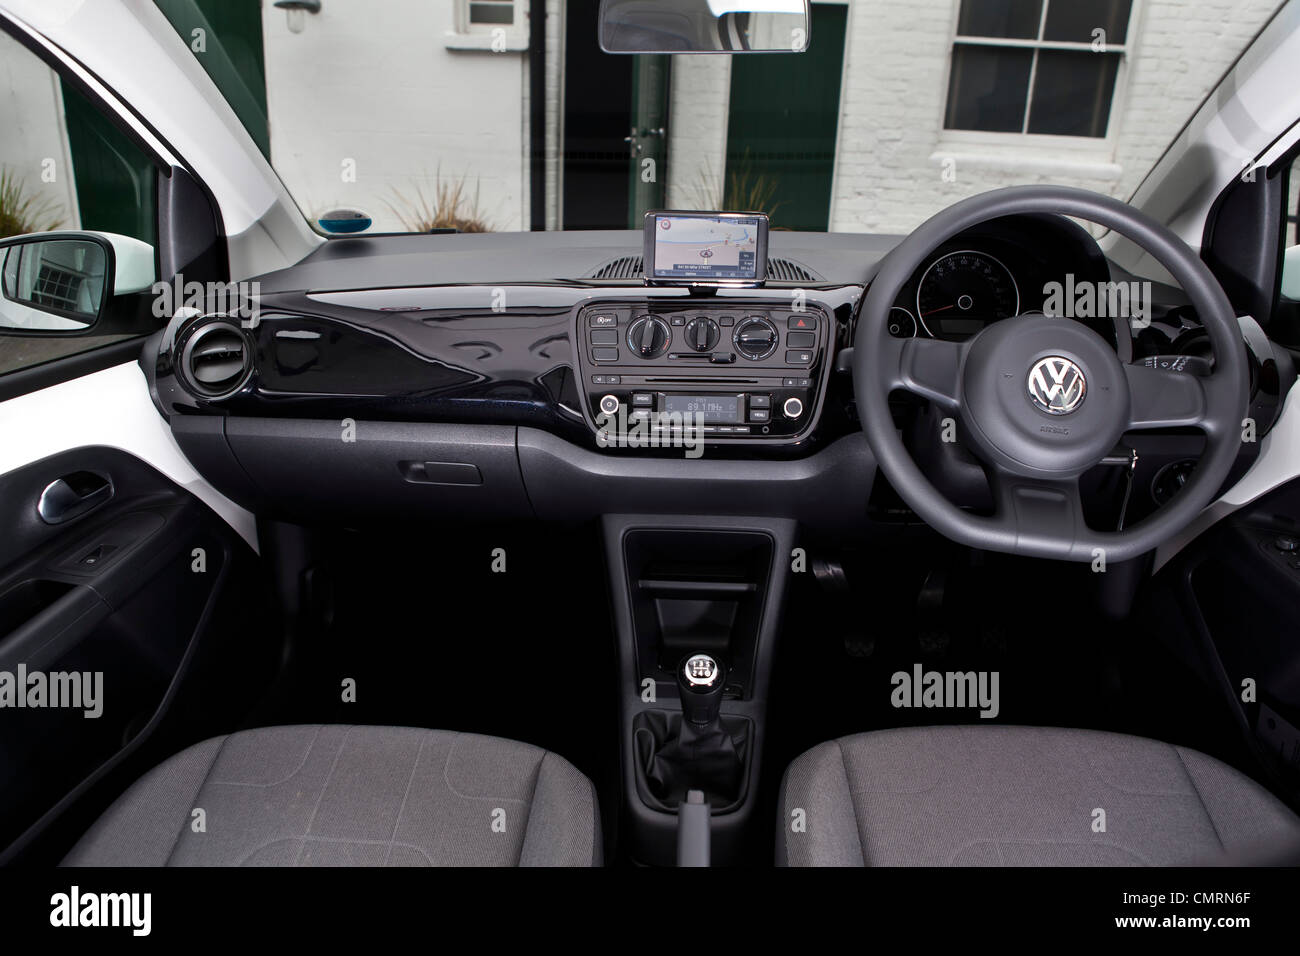 2012 Volkswagen Up Main Interior Stock Photo 47235399 Alamy